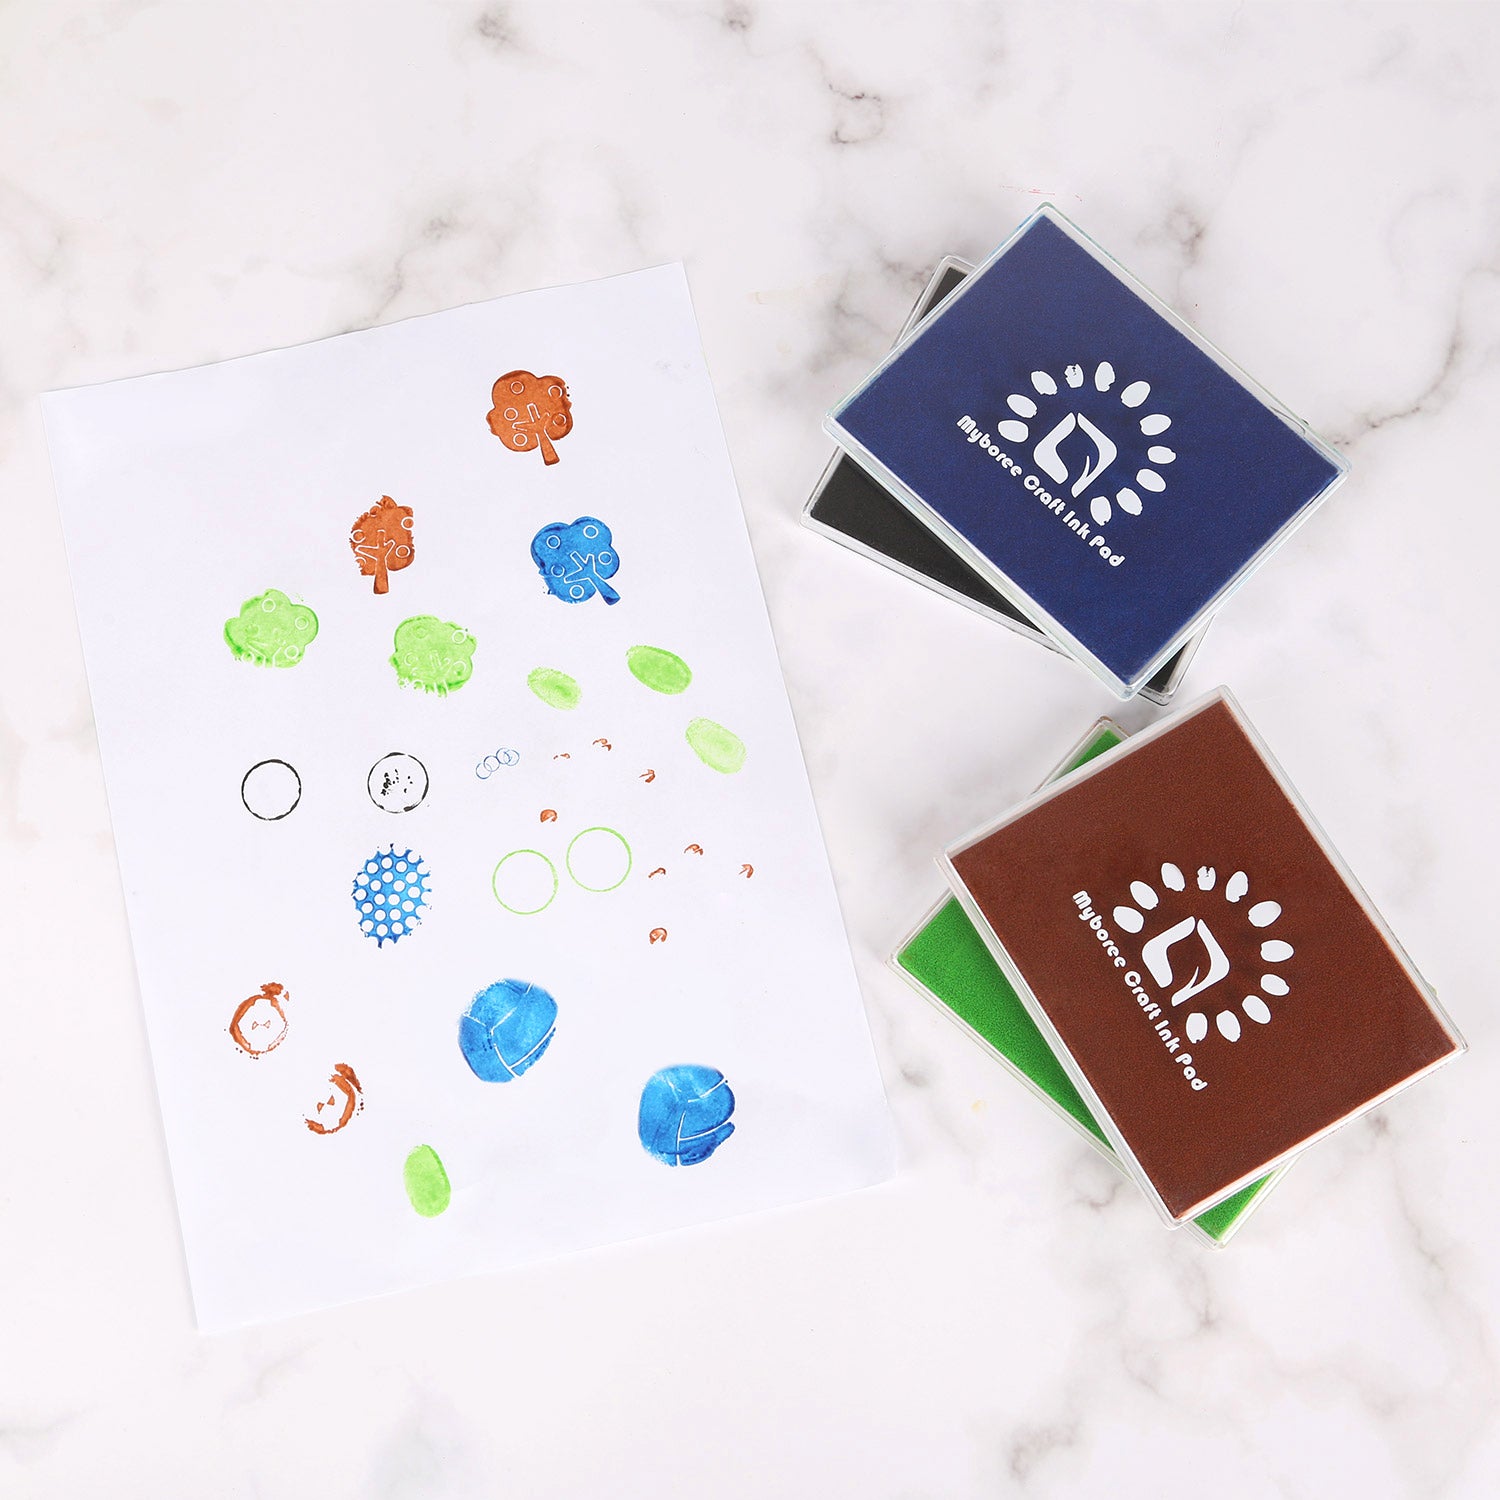 Myboree Craft Washable Square Large Ink Pads Stamps for Kids DIY Proje